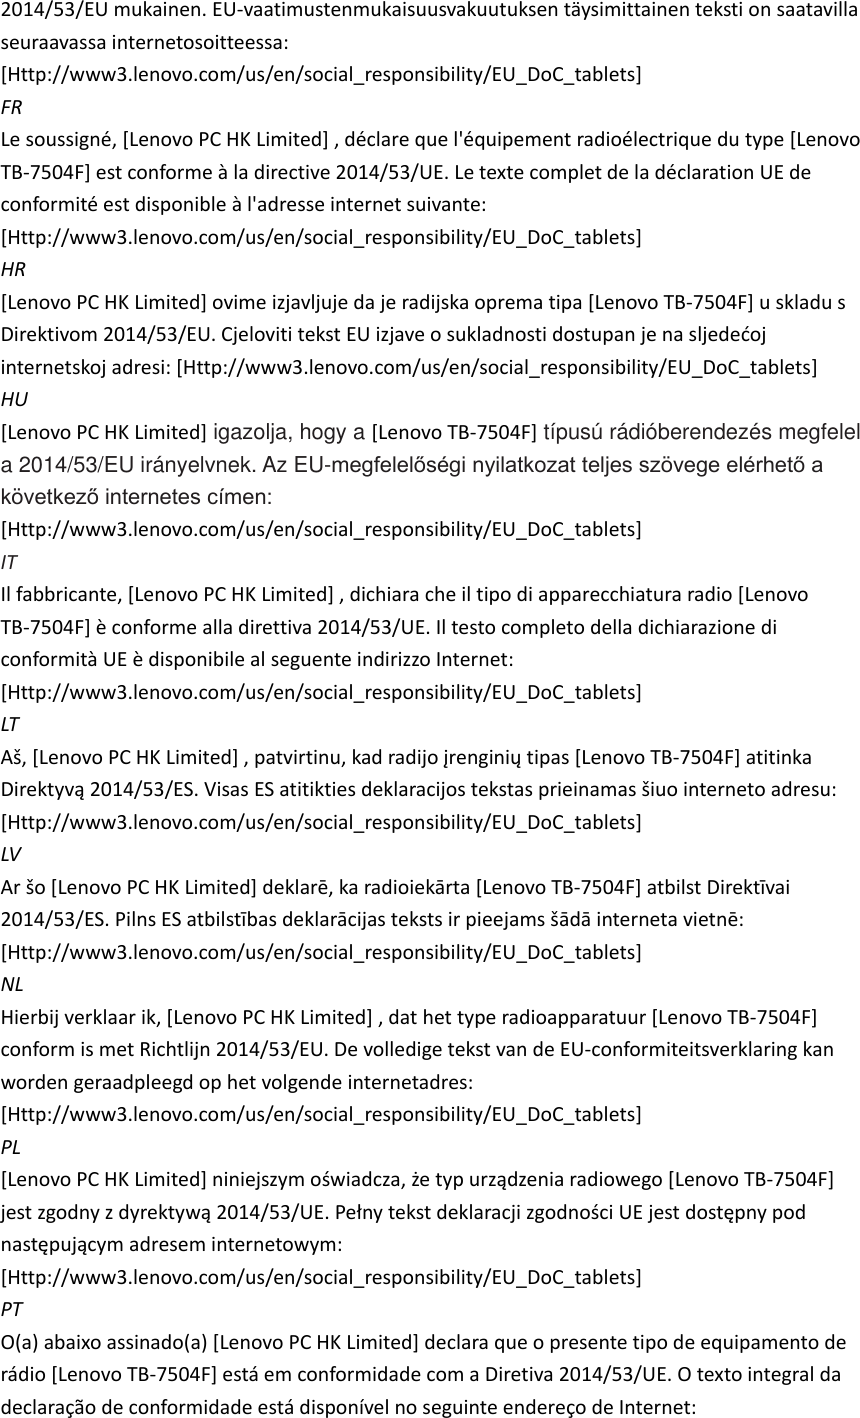 2014/53/EU mukainen. EU-vaatimustenmukaisuusvakuutuksen täysimittainen teksti on saatavilla seuraavassa internetosoitteessa: [Http://www3.lenovo.com/us/en/social_responsibility/EU_DoC_tablets]   FR Le soussigné, [Lenovo PC HK Limited] , déclare que l&apos;équipement radioélectrique du type [Lenovo TB-7504F] est conforme à la directive 2014/53/UE. Le texte complet de la déclaration UE de conformité est disponible à l&apos;adresse internet suivante: [Http://www3.lenovo.com/us/en/social_responsibility/EU_DoC_tablets]   HR [Lenovo PC HK Limited] ovime izjavljuje da je radijska oprema tipa [Lenovo TB-7504F] u skladu s internetskoj adresi: [Http://www3.lenovo.com/us/en/social_responsibility/EU_DoC_tablets]   HU [Lenovo PC HK Limited] igazolja, hogy a [Lenovo TB-7504F] típusú rádióberendezés megfelel a 2014/53/EU irányelvnek. Az EU-megfelelőségi nyilatkozat teljes szövege elérhető a következő internetes címen: [Http://www3.lenovo.com/us/en/social_responsibility/EU_DoC_tablets]   IT Il fabbricante, [Lenovo PC HK Limited] , dichiara che il tipo di apparecchiatura radio [Lenovo TB-7504F] è conforme alla direttiva 2014/53/UE. Il testo completo della dichiarazione di conformità UE è disponibile al seguente indirizzo Internet: [Http://www3.lenovo.com/us/en/social_responsibility/EU_DoC_tablets]   LT Lenovo PC HK LimitedLenovo TB-7504F] atitinka [Http://www3.lenovo.com/us/en/social_responsibility/EU_DoC_tablets]   LV Lenovo PC HK LimitedLenovo TB-7504F [Http://www3.lenovo.com/us/en/social_responsibility/EU_DoC_tablets]   NL Hierbij verklaar ik, [Lenovo PC HK Limited] , dat het type radioapparatuur [Lenovo TB-7504F] conform is met Richtlijn 2014/53/EU. De volledige tekst van de EU-conformiteitsverklaring kan worden geraadpleegd op het volgende internetadres: [Http://www3.lenovo.com/us/en/social_responsibility/EU_DoC_tablets]   PL [Lenovo PC HK LimitedLenovo TB-7504F]  [Http://www3.lenovo.com/us/en/social_responsibility/EU_DoC_tablets]   PT O(a) abaixo assinado(a) [Lenovo PC HK Limited] declara que o presente tipo de equipamento de rádio [Lenovo TB-7504F] está em conformidade com a Diretiva 2014/53/UE. O texto integral da declaração de conformidade está disponível no seguinte endereço de Internet: 